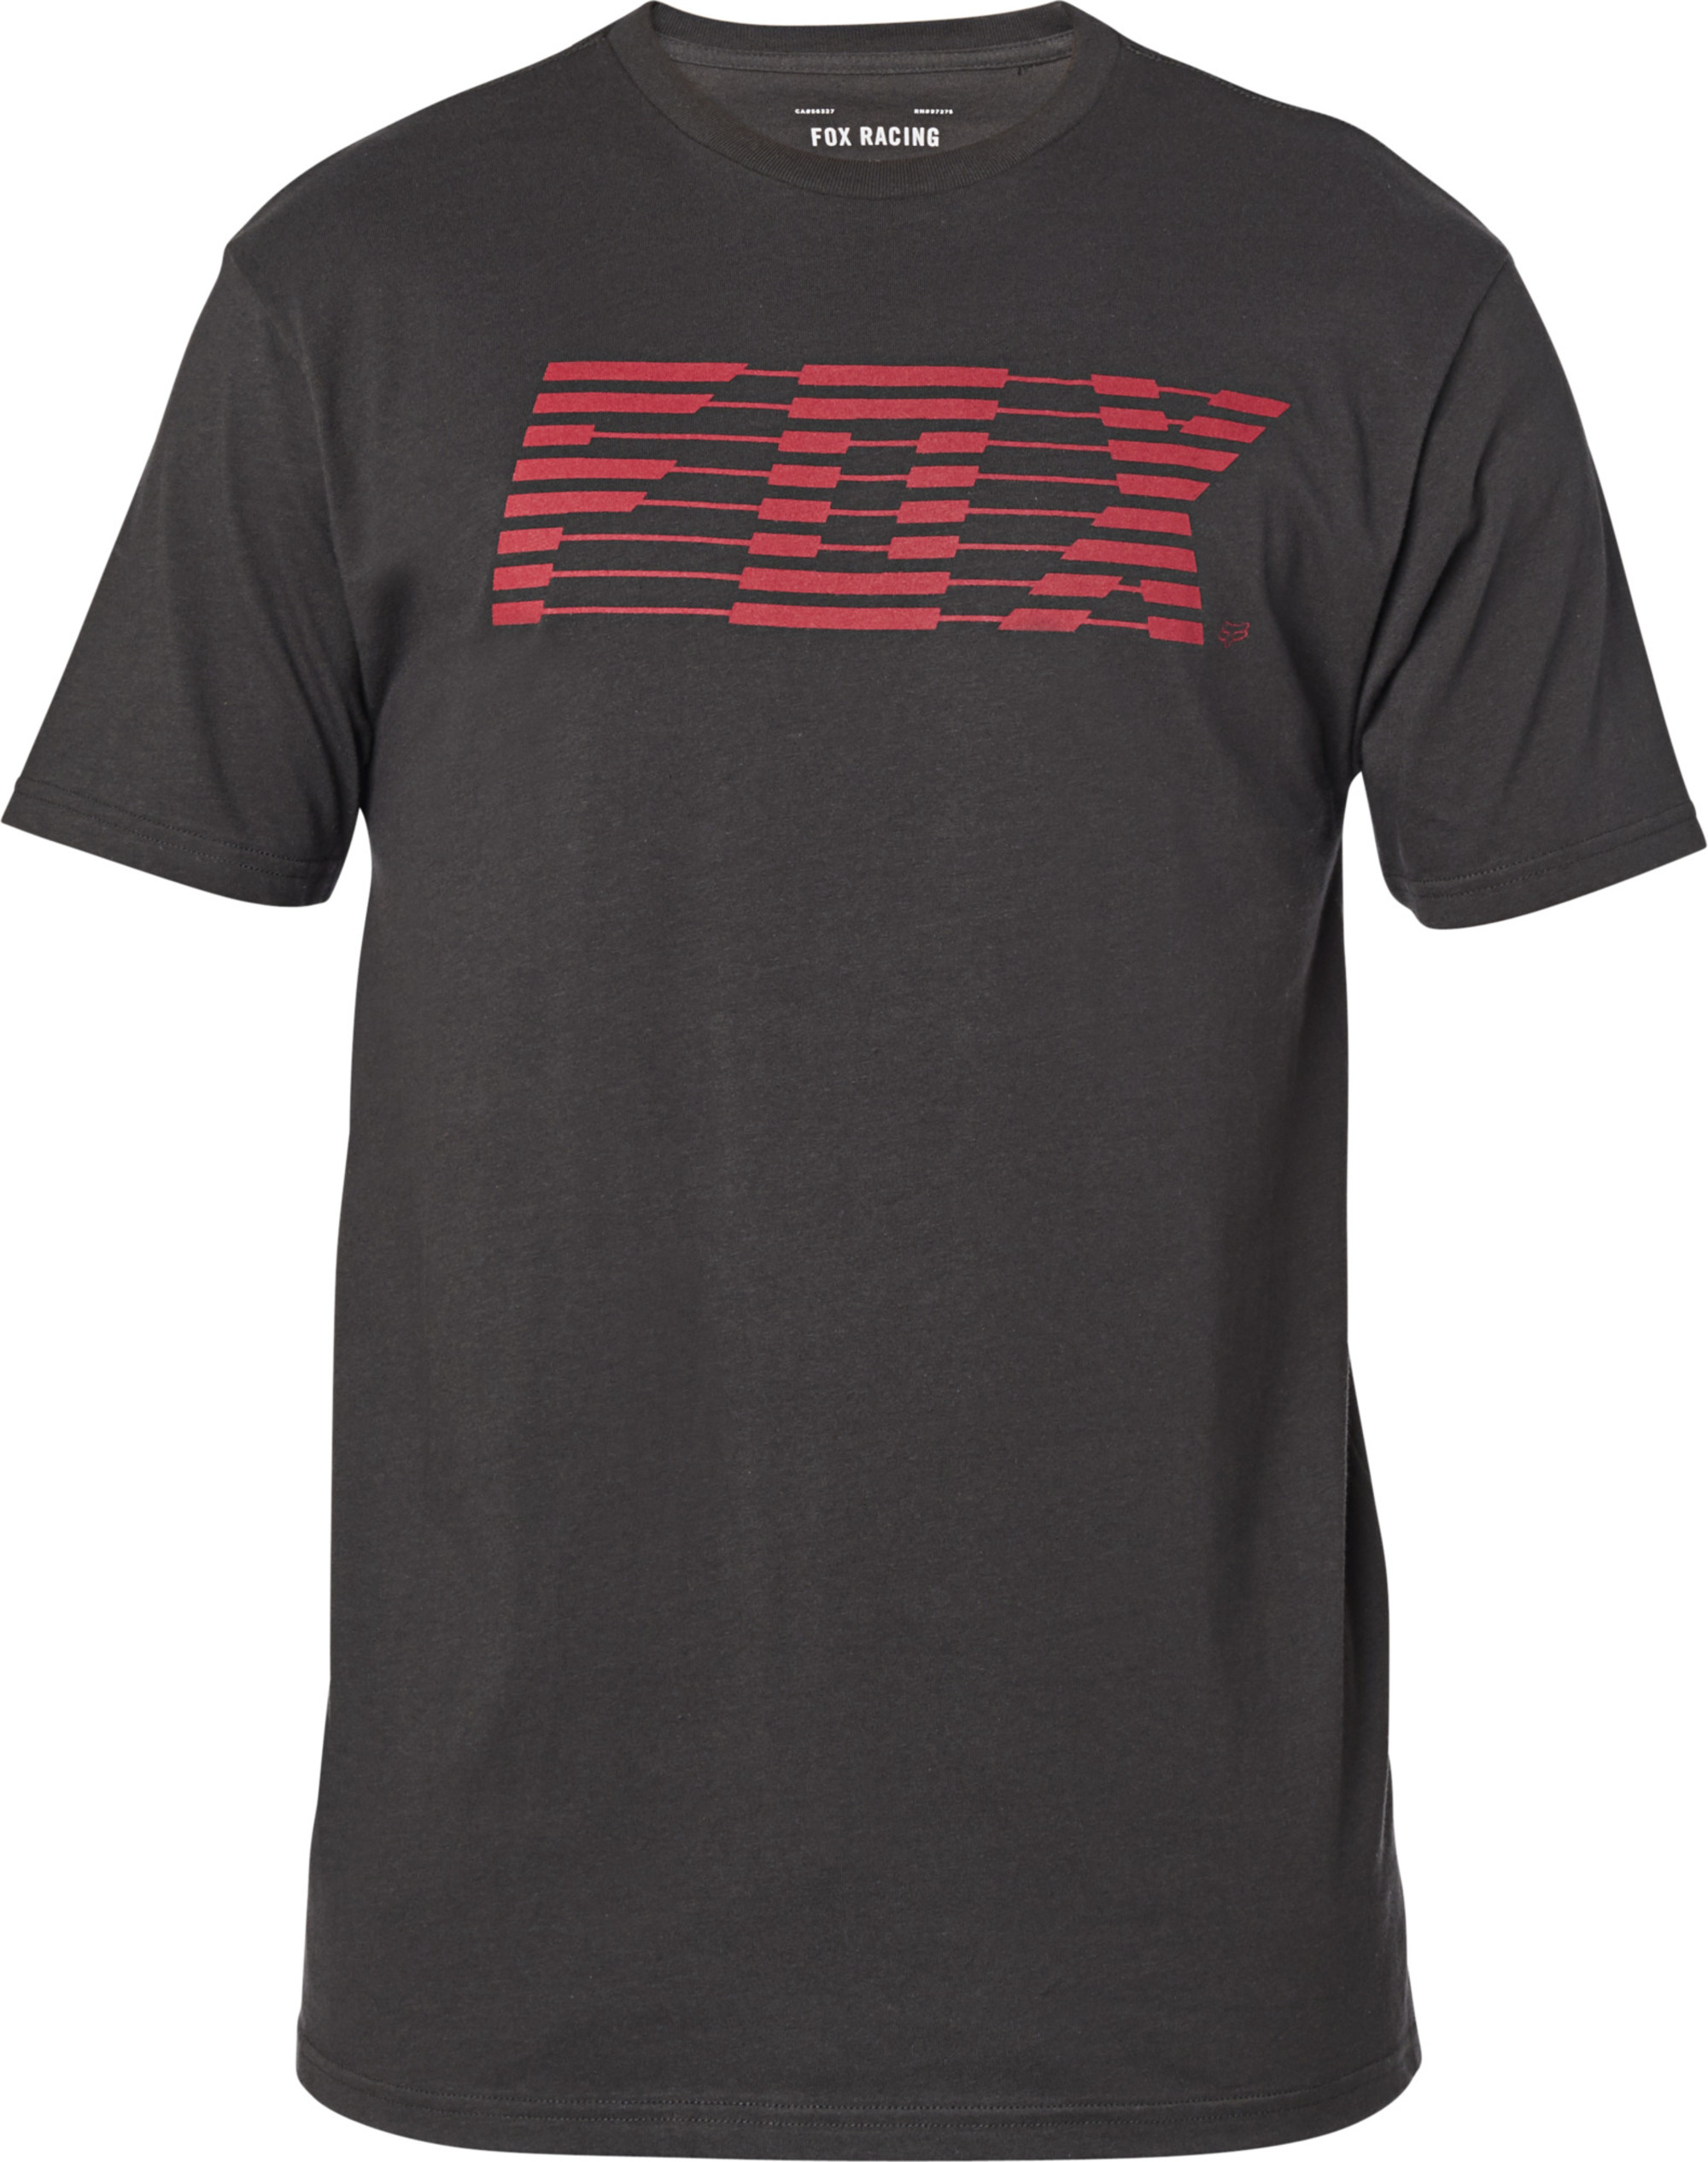 fox racing t-shirt shirts for men tracer premium